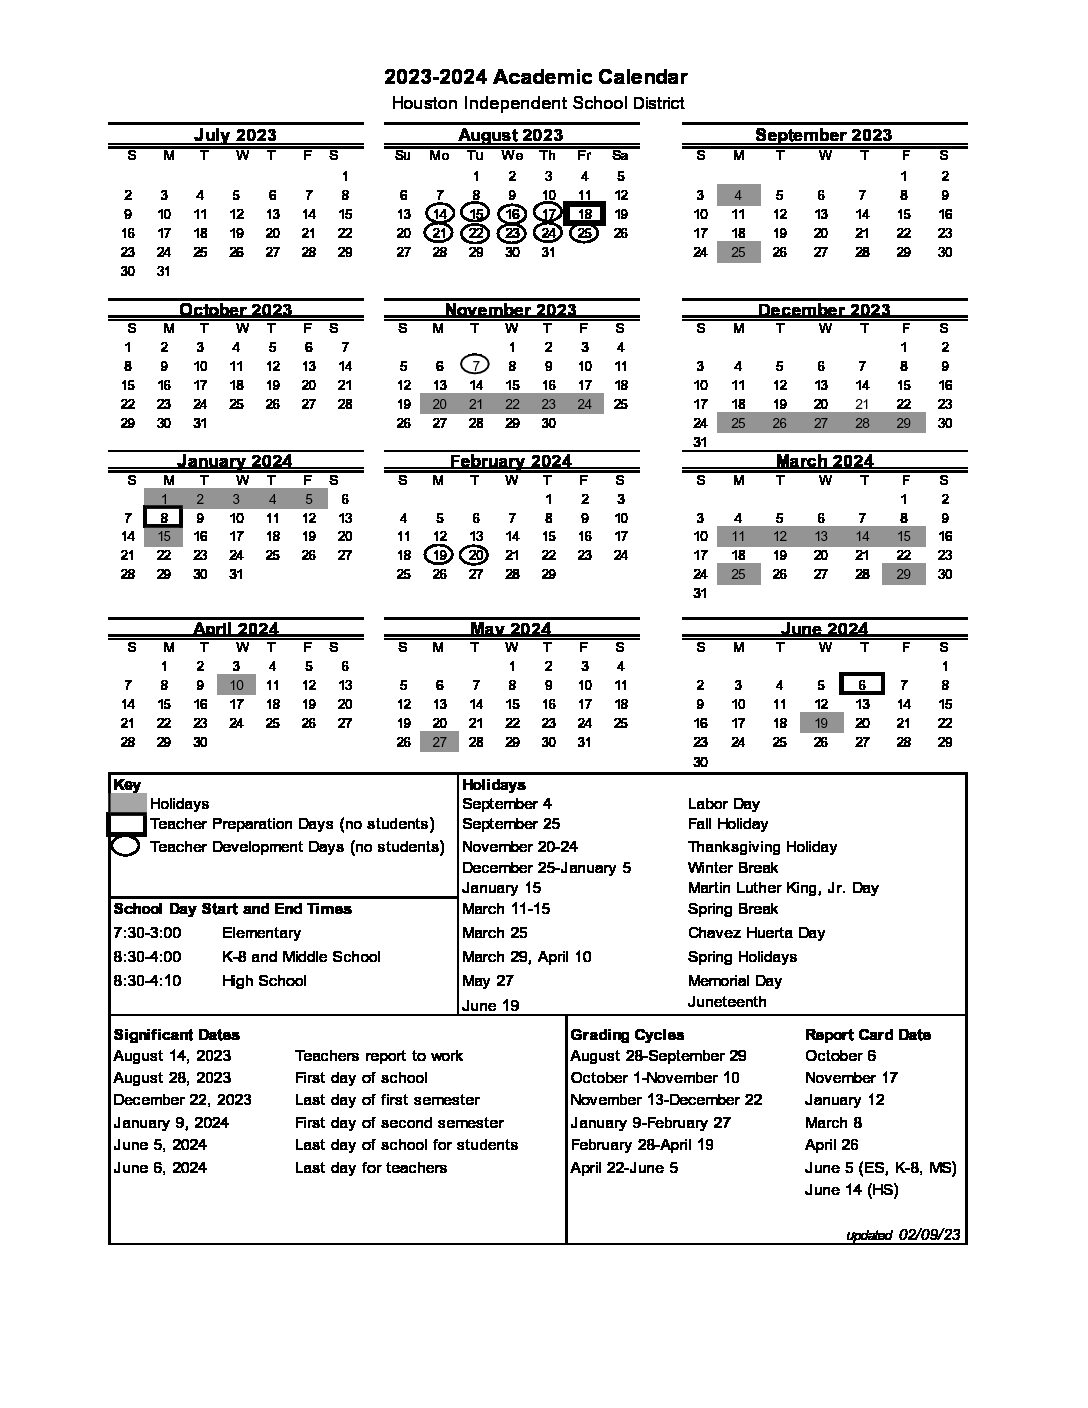 Houston Independent School District Calendar 20232024